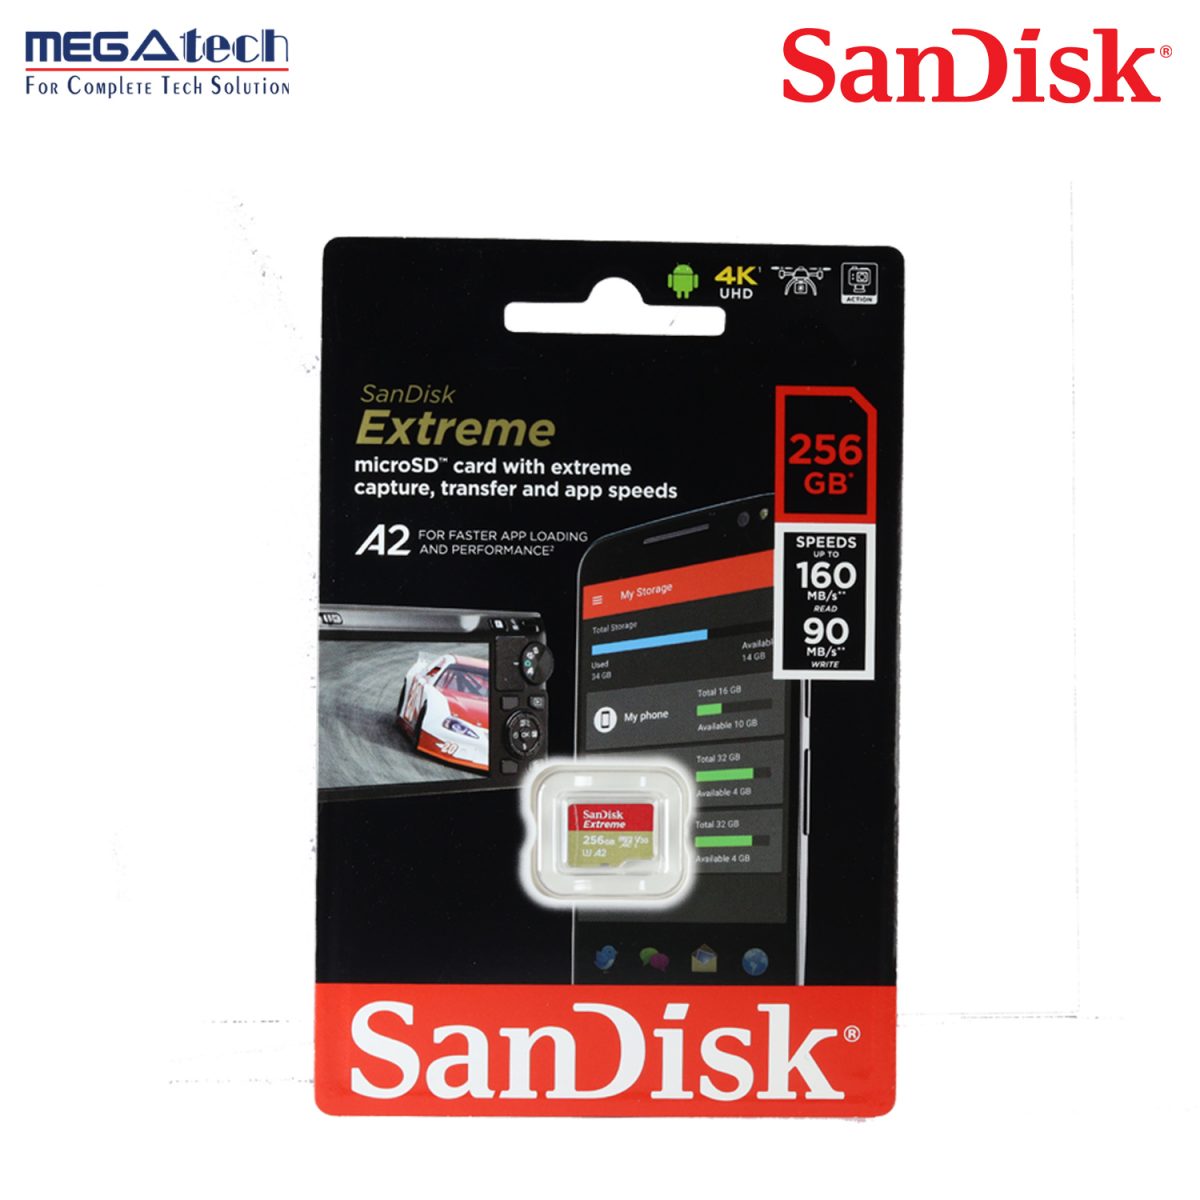 SanDisk 256GB Extreme microSDXC UHS-I Memory Card – Up to 160MB/s, C10, U3, V30, 4K, A2